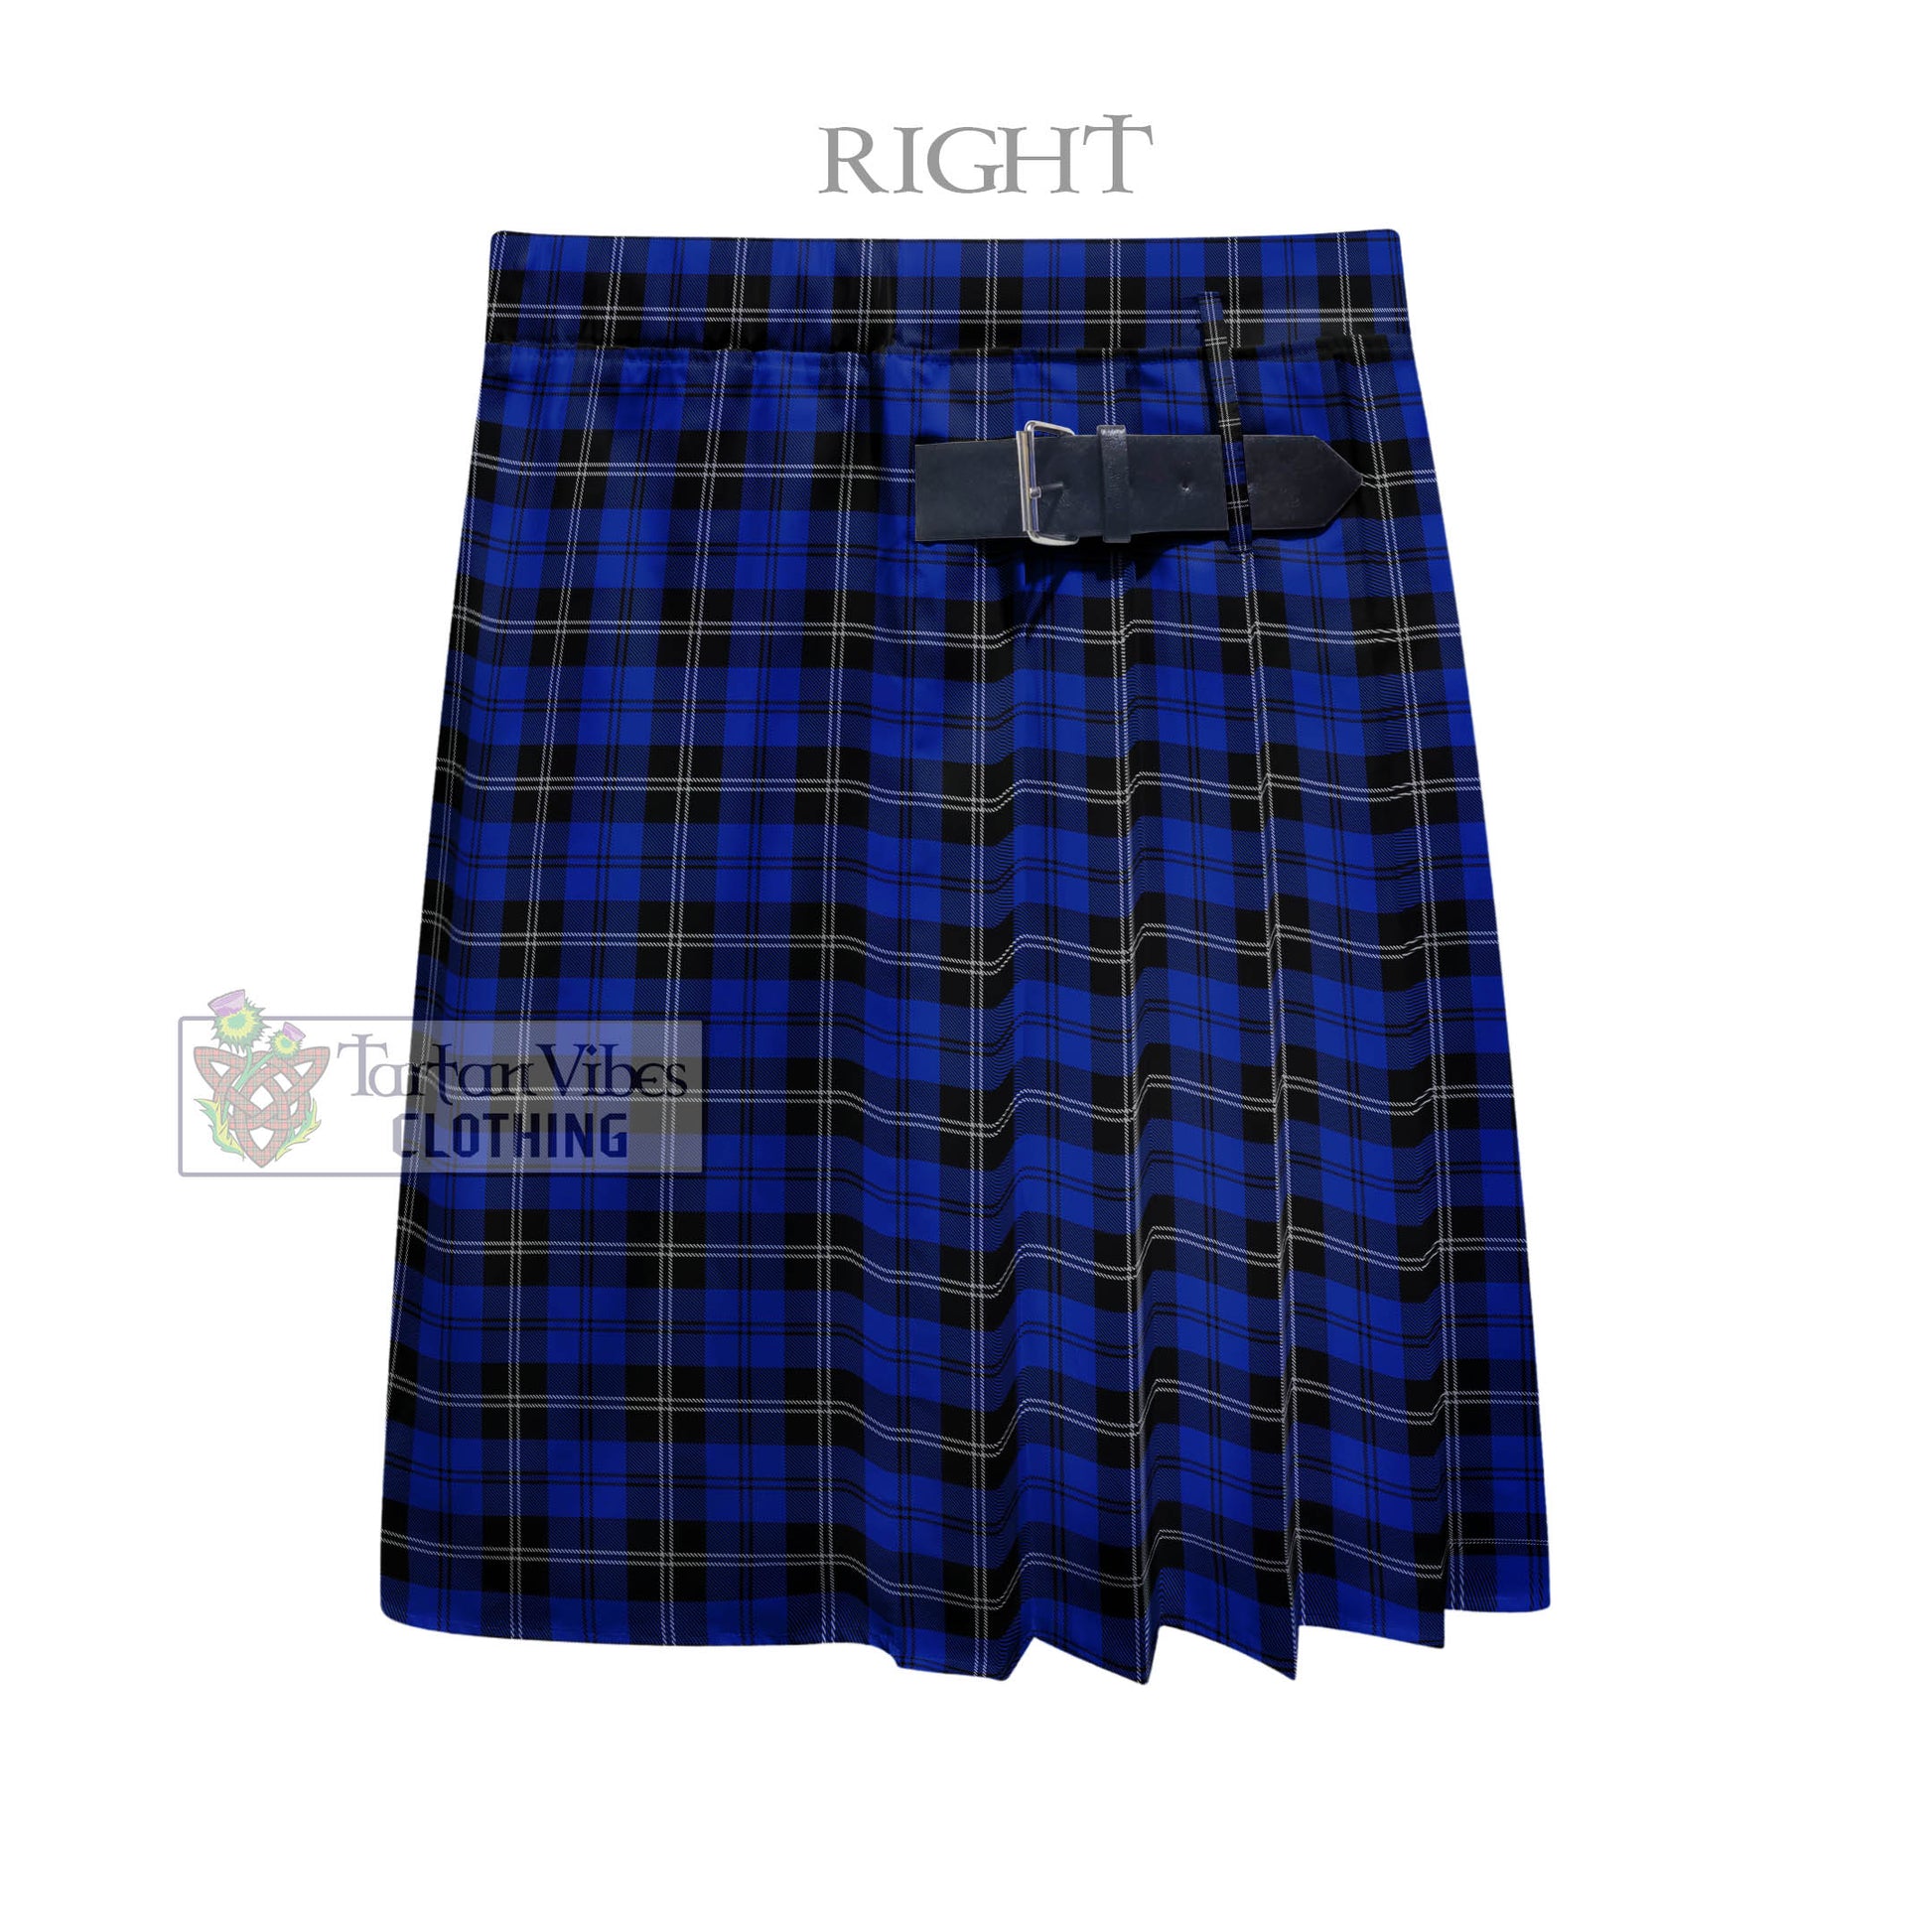 Tartan Vibes Clothing Swan Tartan Men's Pleated Skirt - Fashion Casual Retro Scottish Style